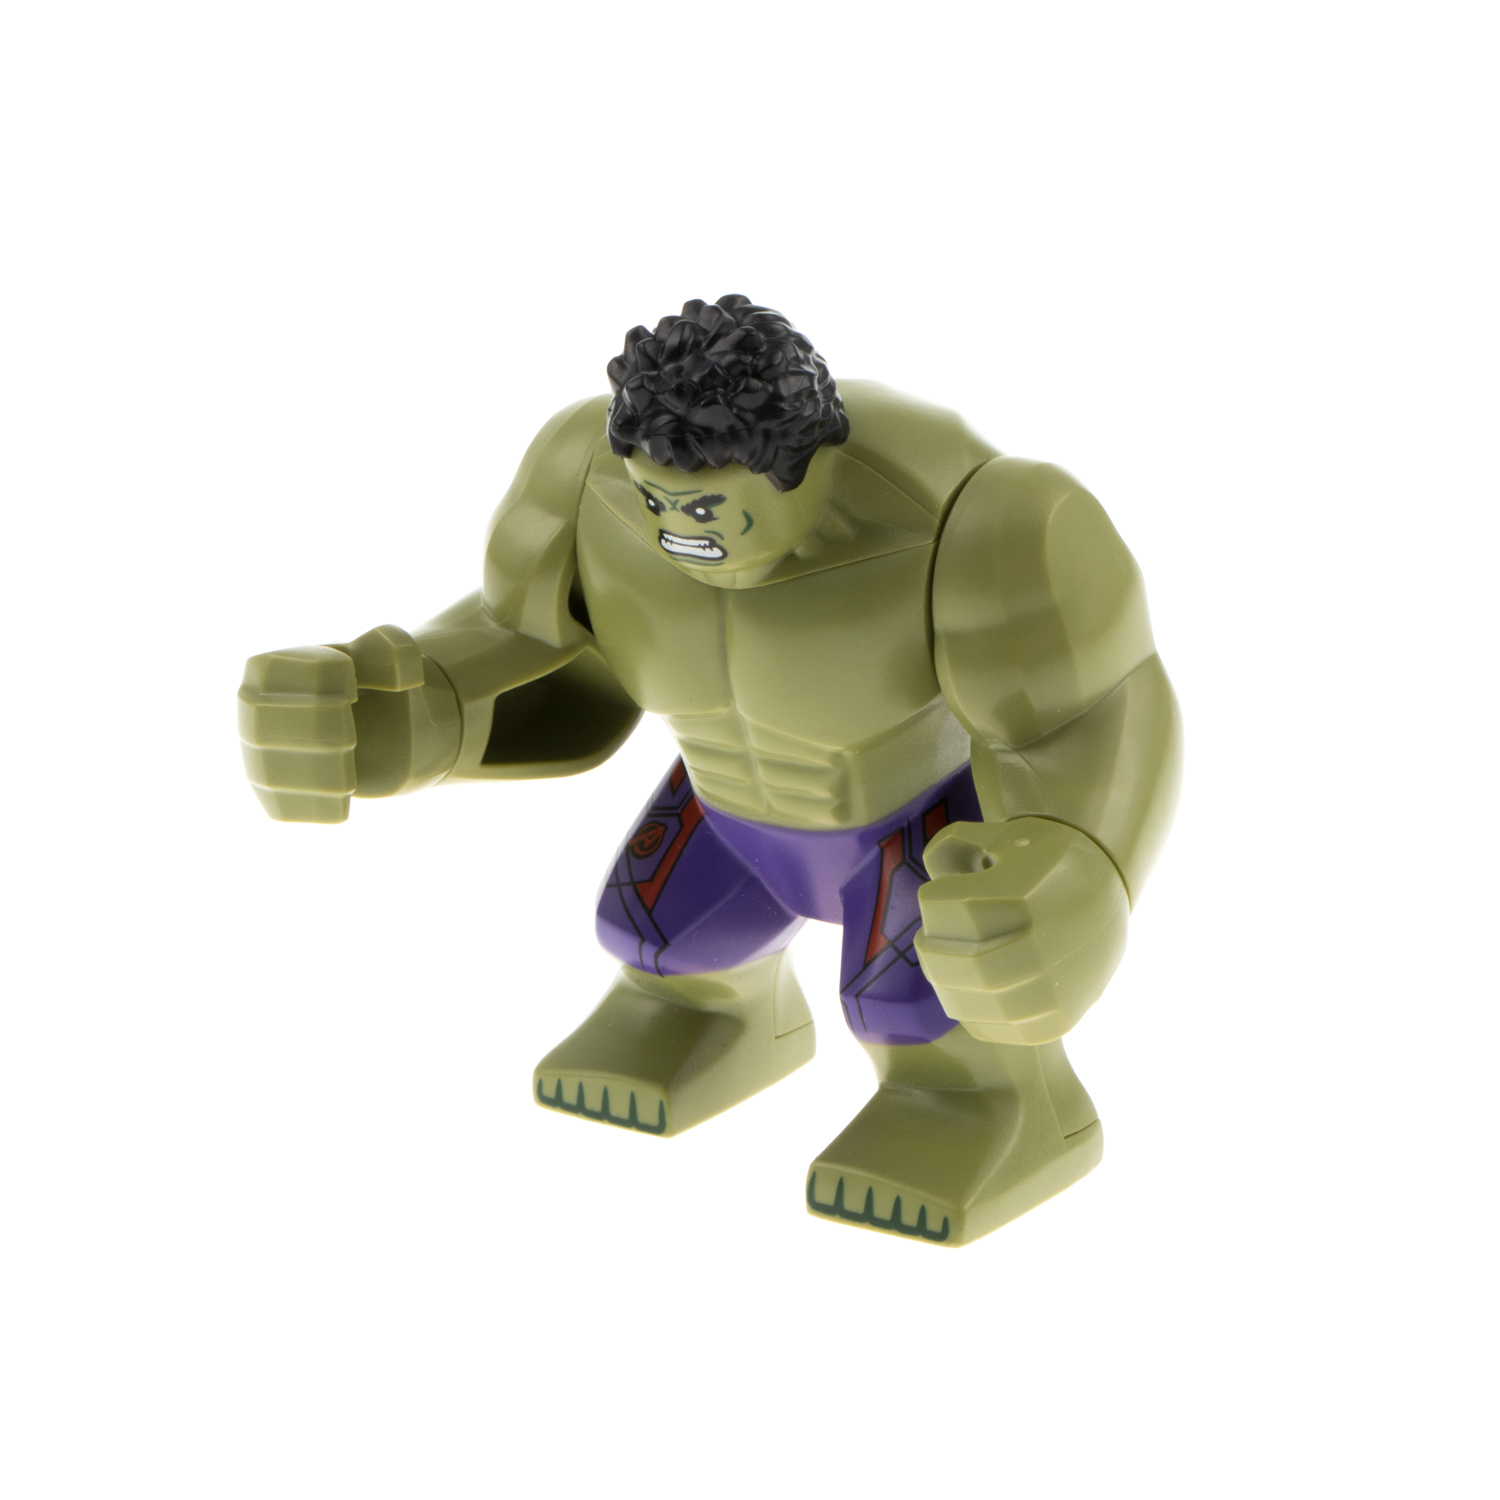 maskulinitet stewardesse Korrespondance 1x Lego Figur Hulk olive grün Hose violett Heroes Avengers sh173